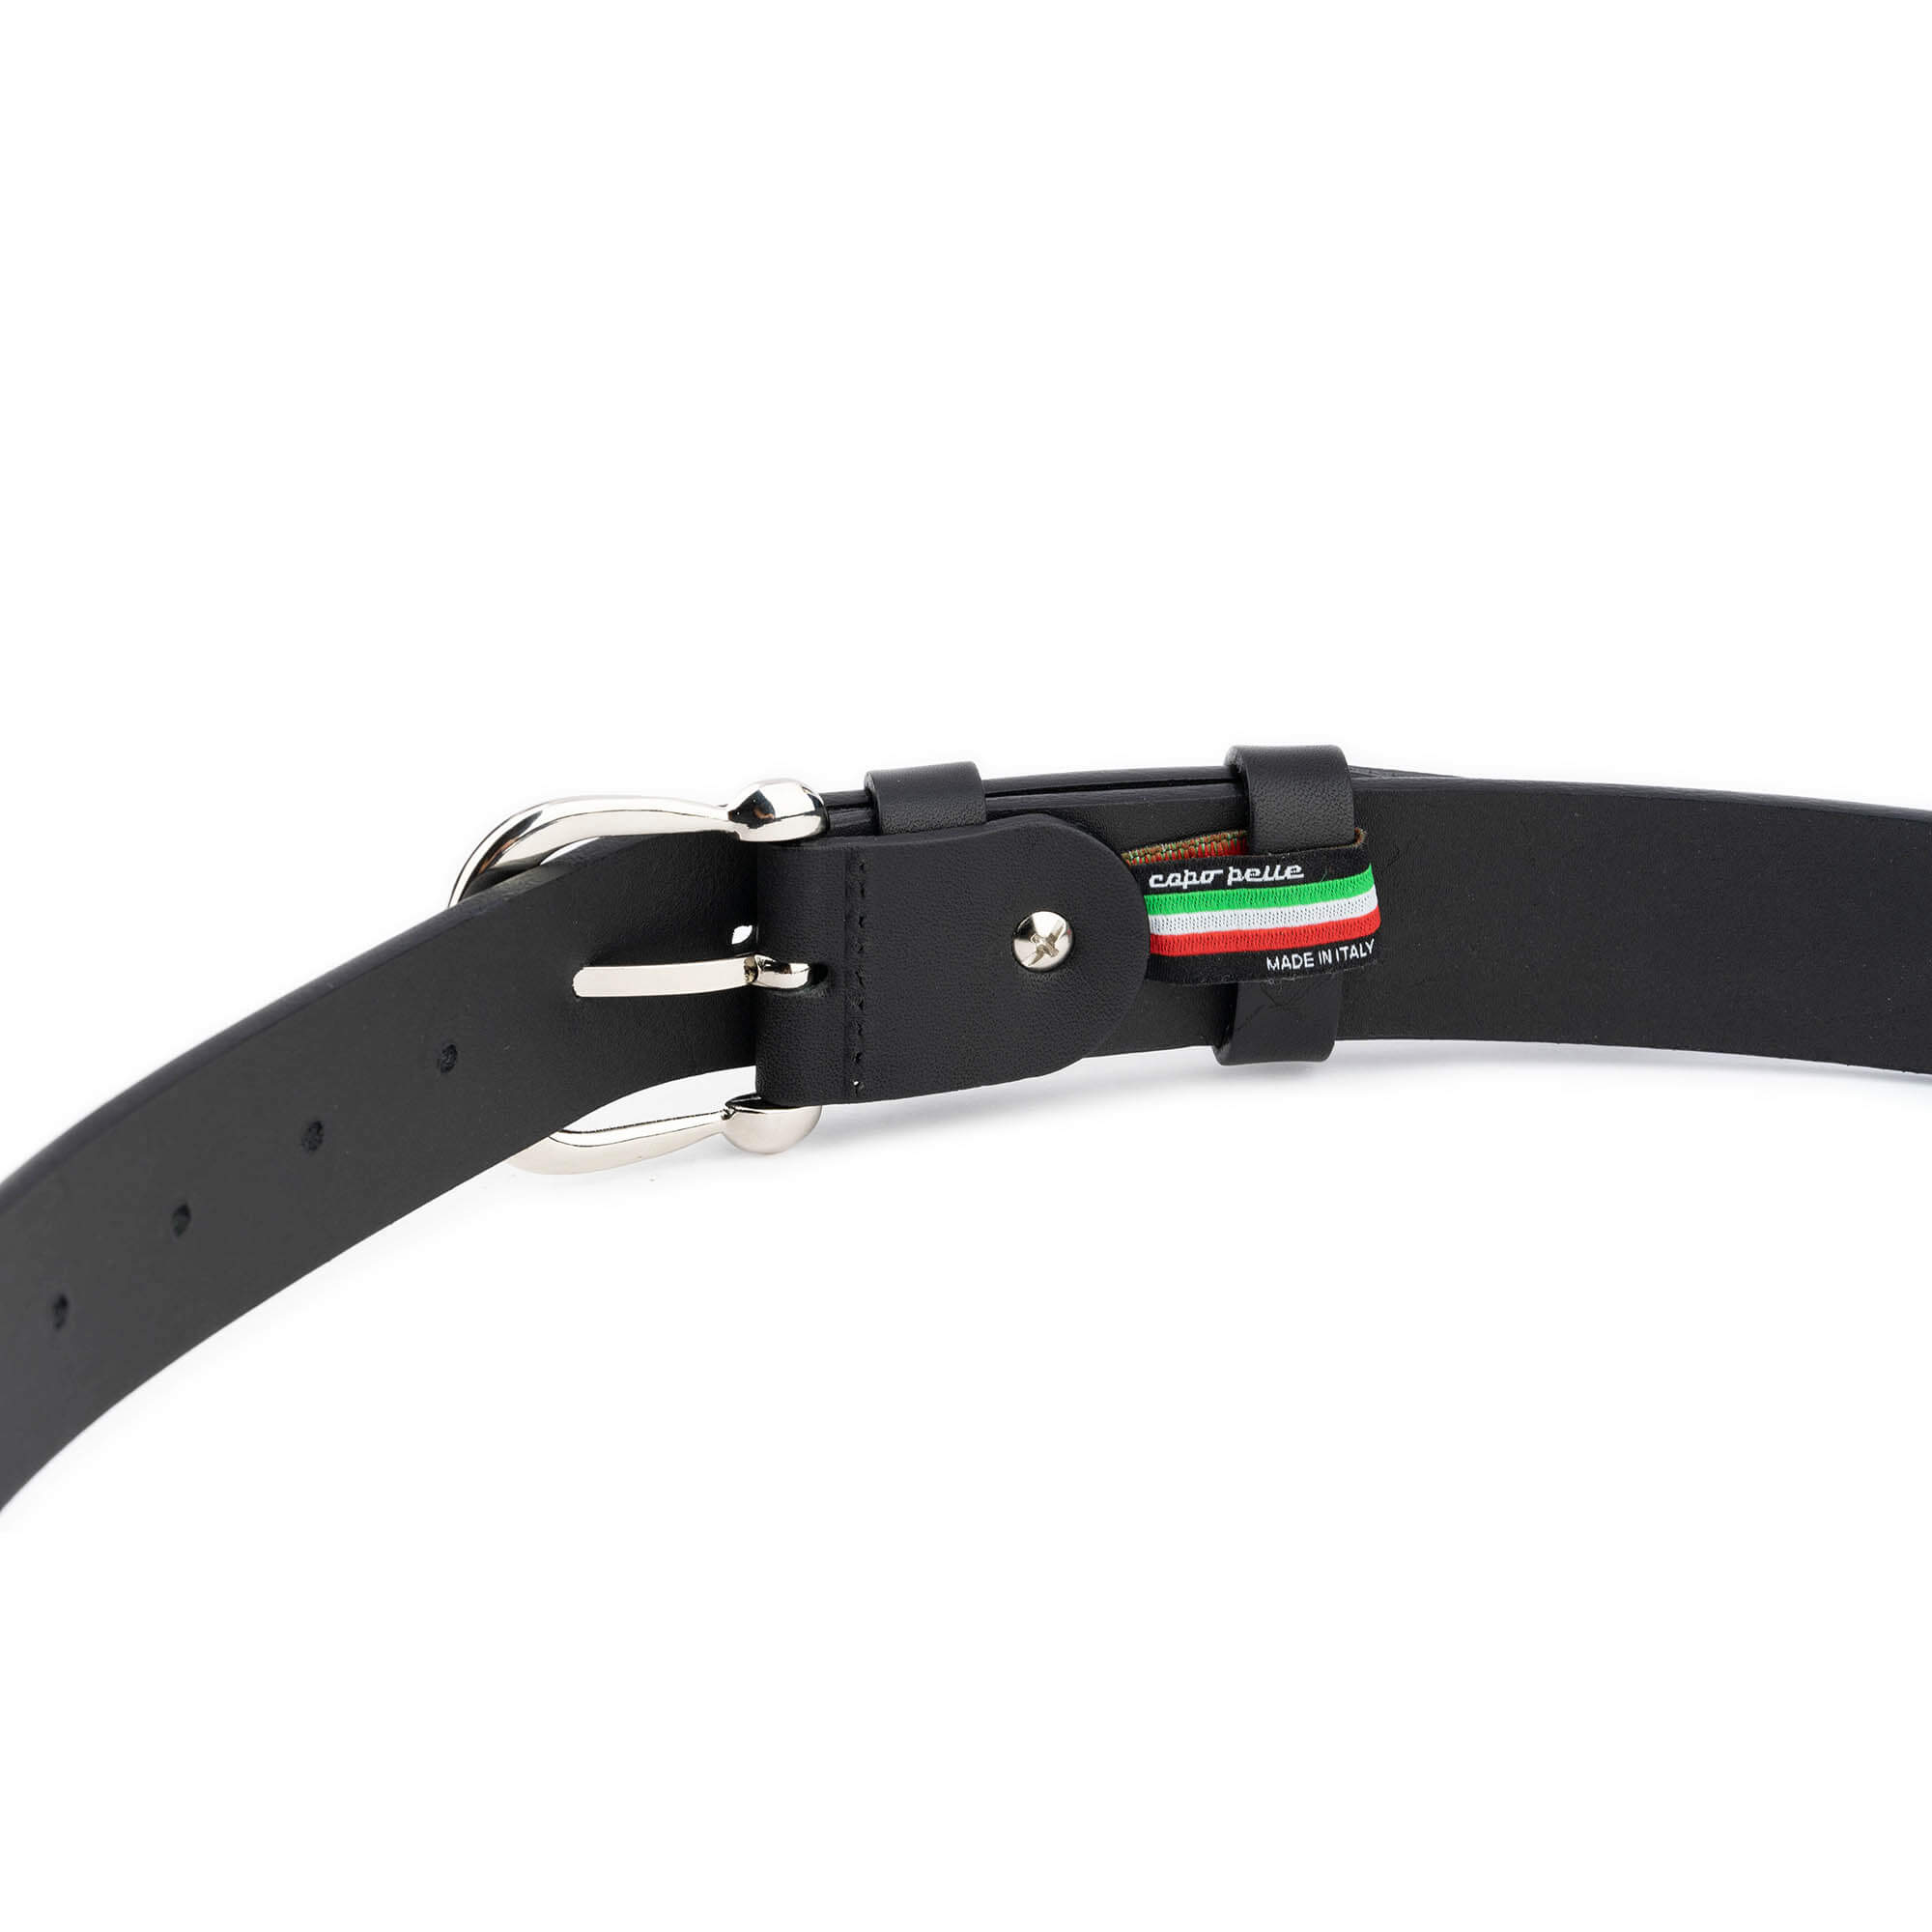 Horseshoe buckle black 35 mm leather belt - Luxury Belts